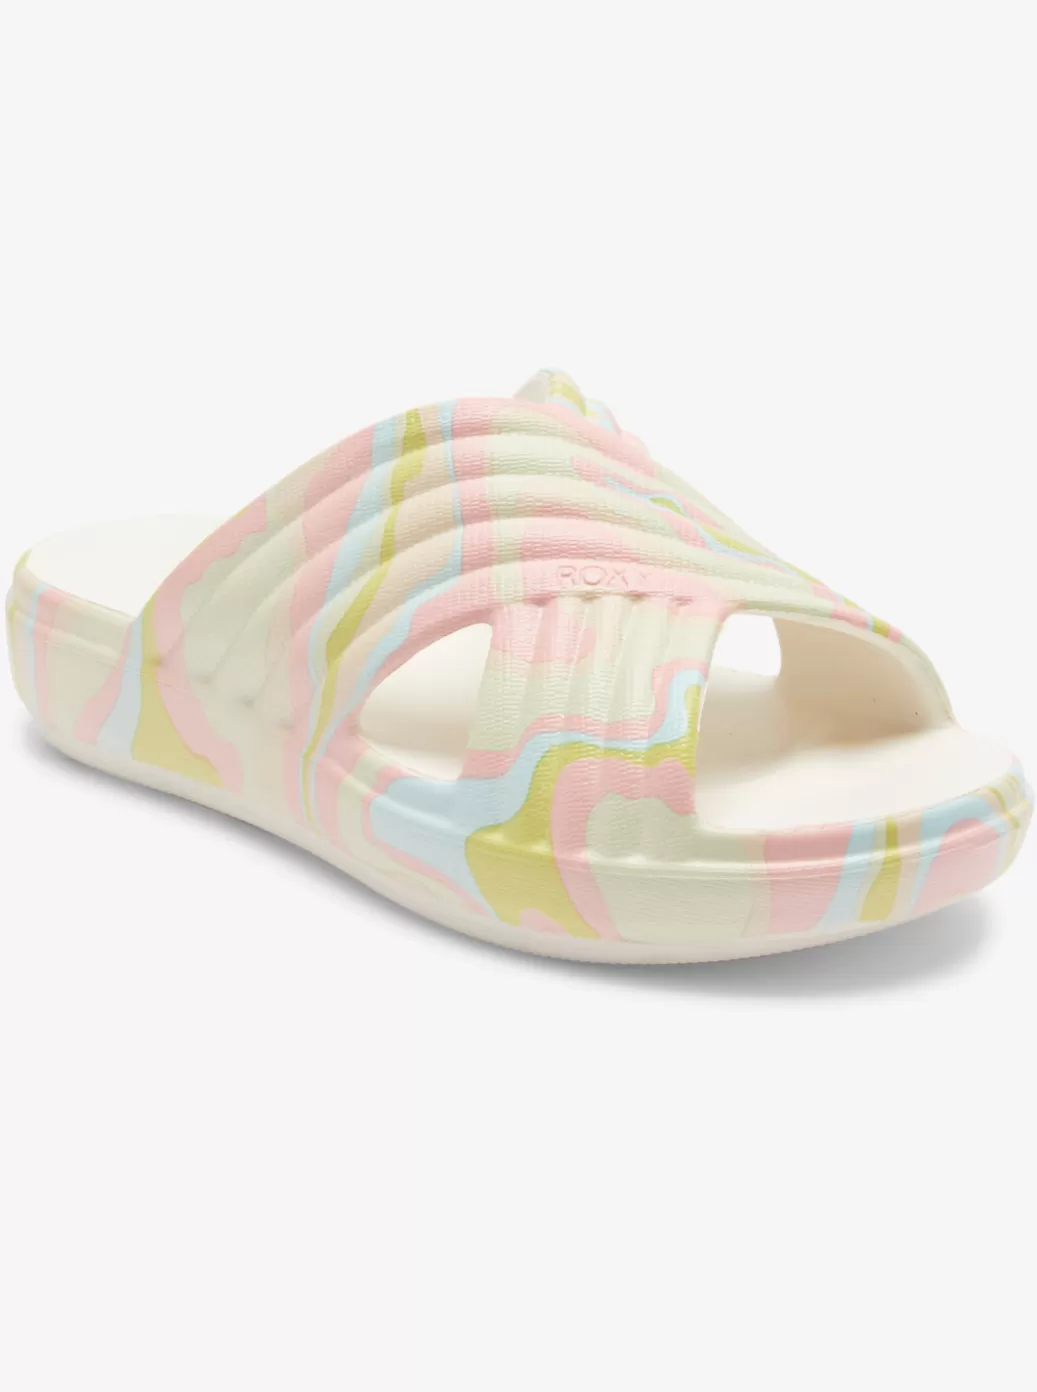 Sandals | WOMEN ROXY Rivie Print Sandals Crazy Pink/soft Lime